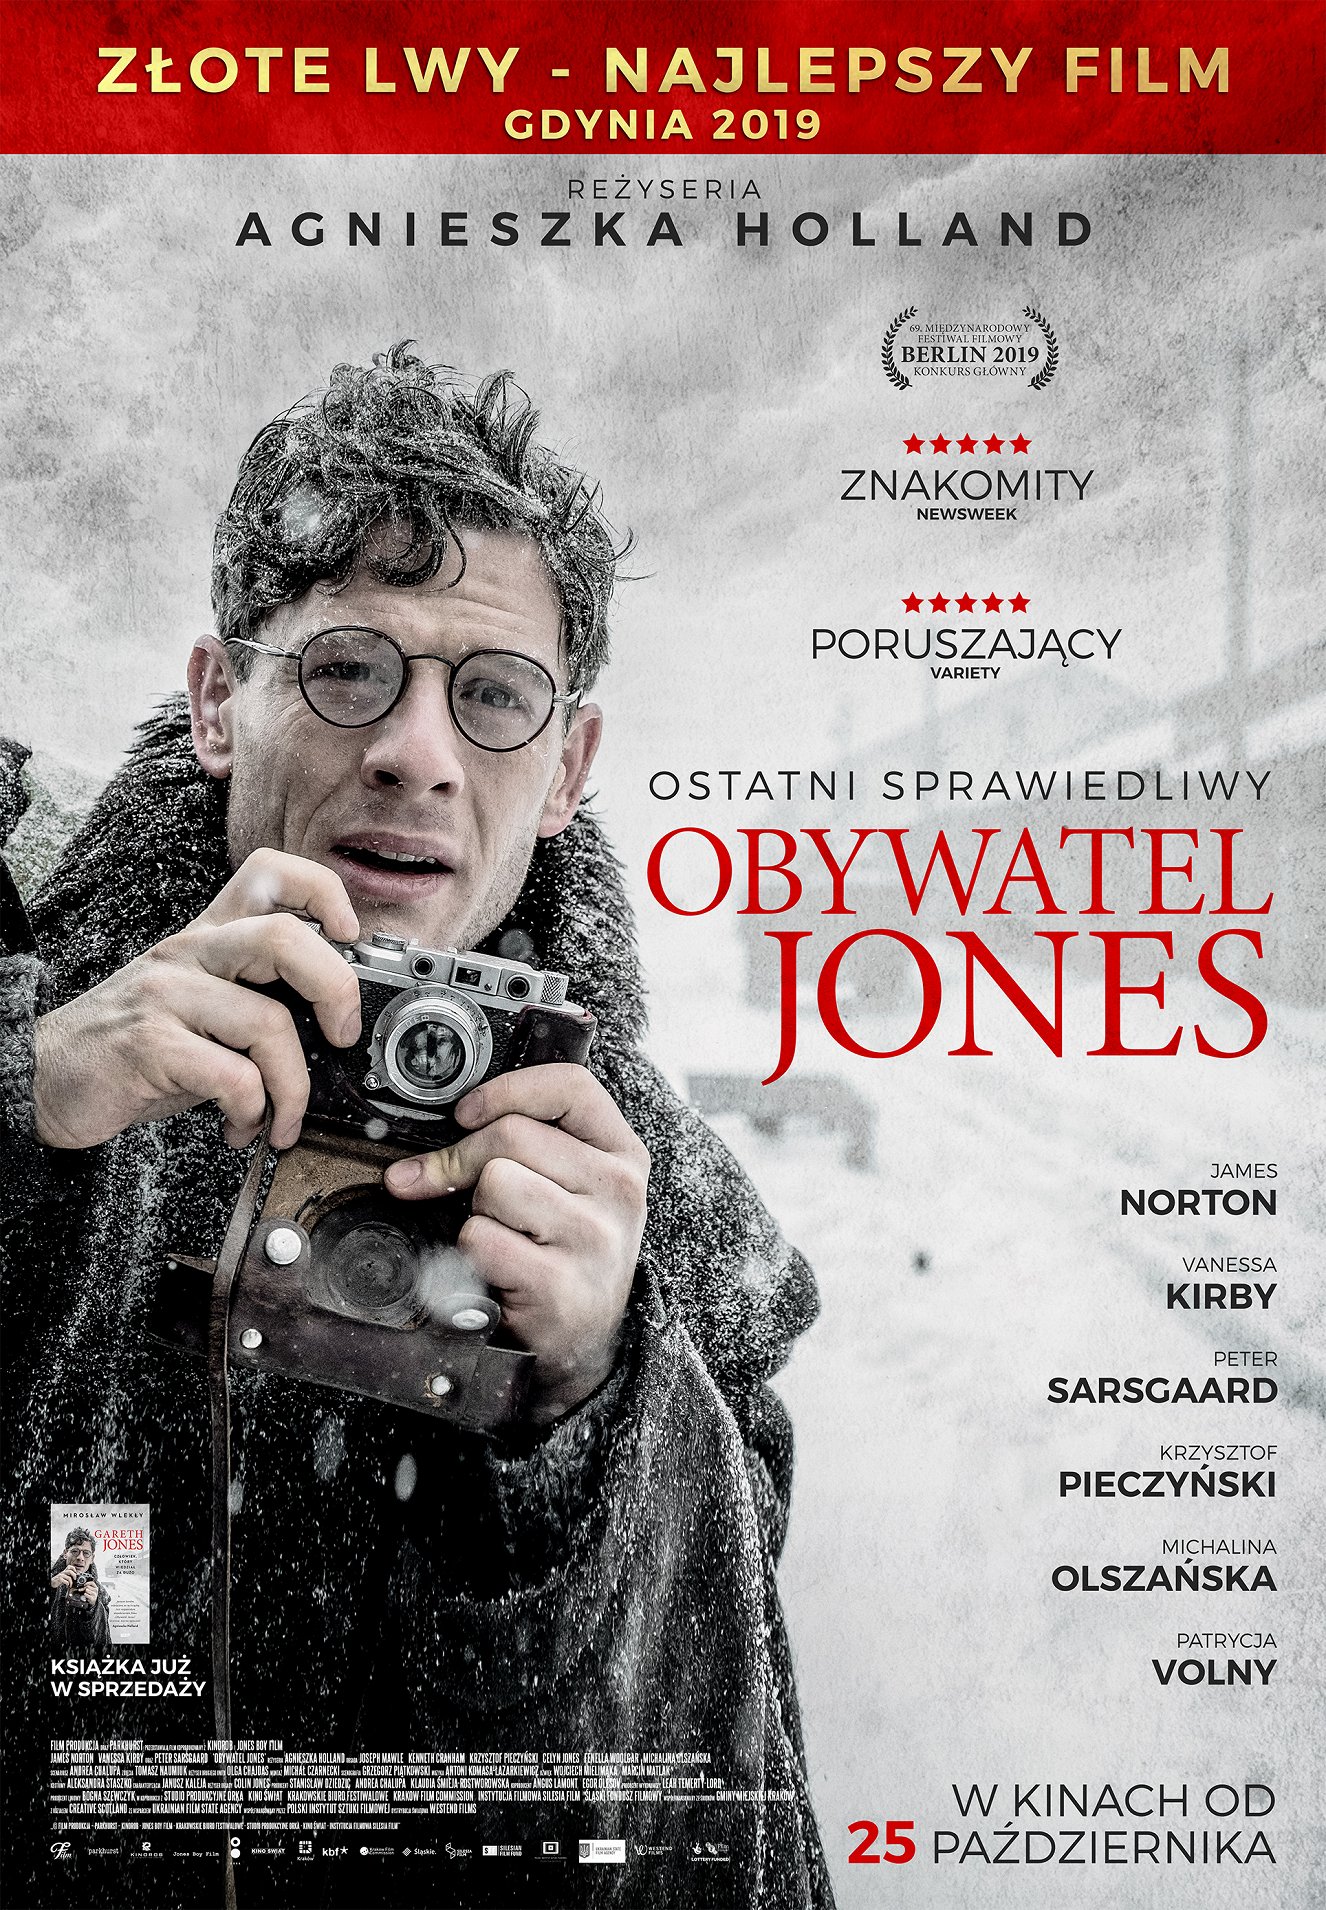 Stiahni si Filmy CZ/SK dabing Pan Jones / Obywatel Jones (2019)(CZ) = CSFD 66%